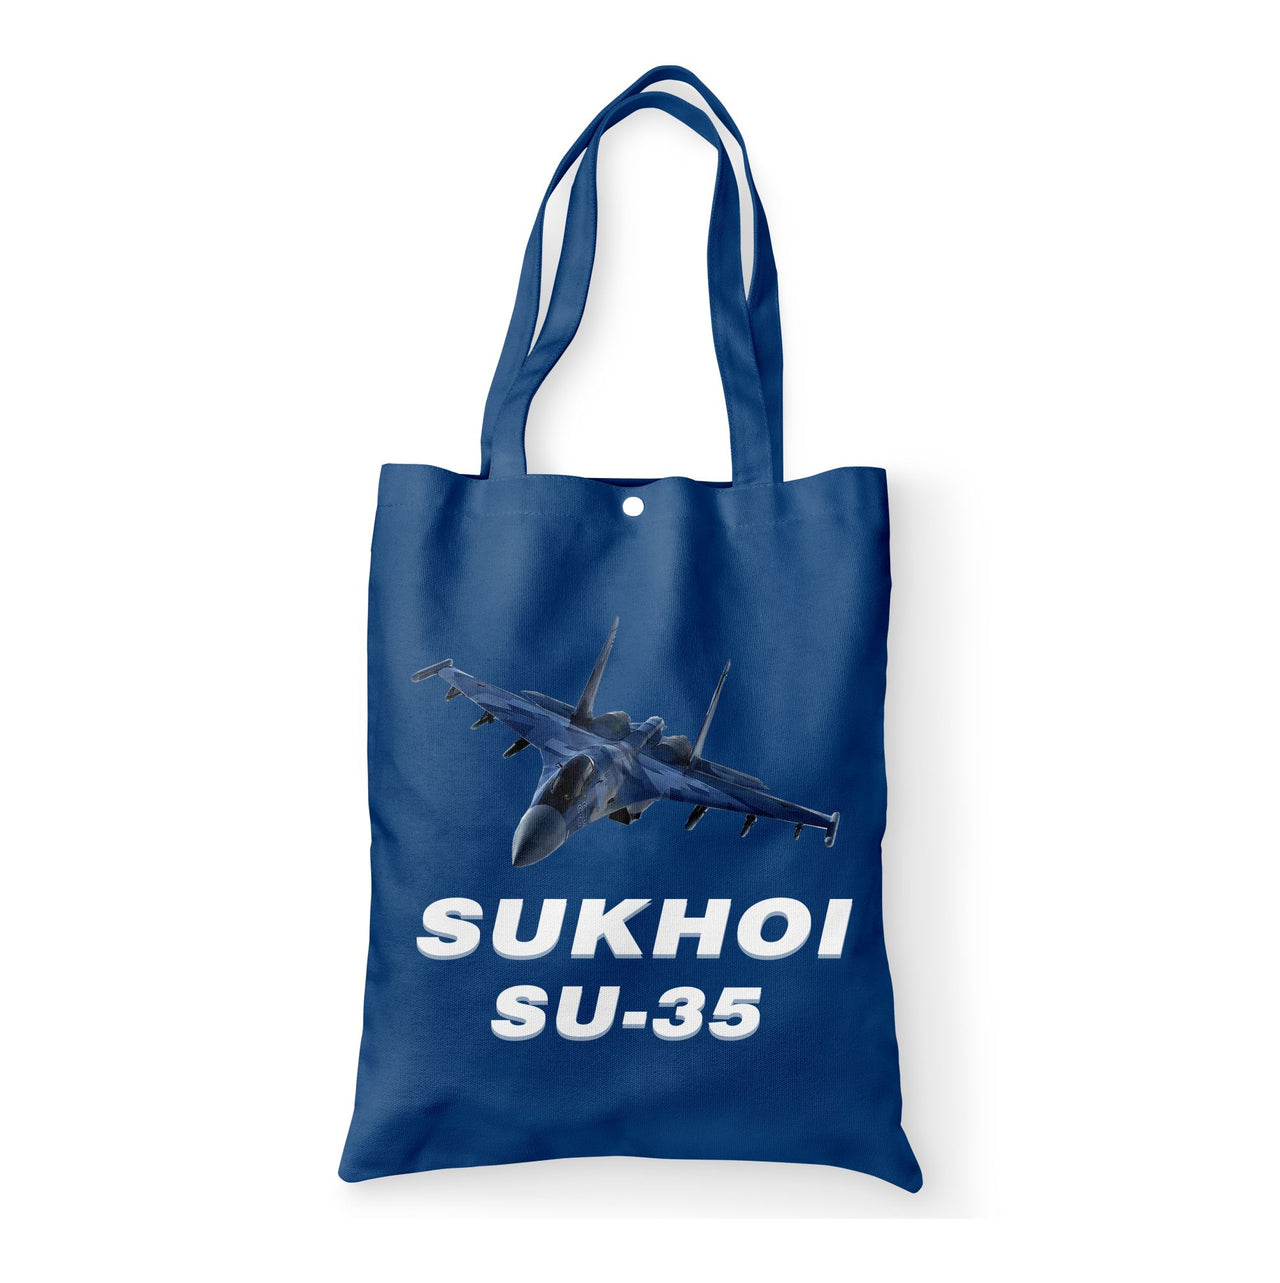 The Sukhoi SU-35 Designed Tote Bags